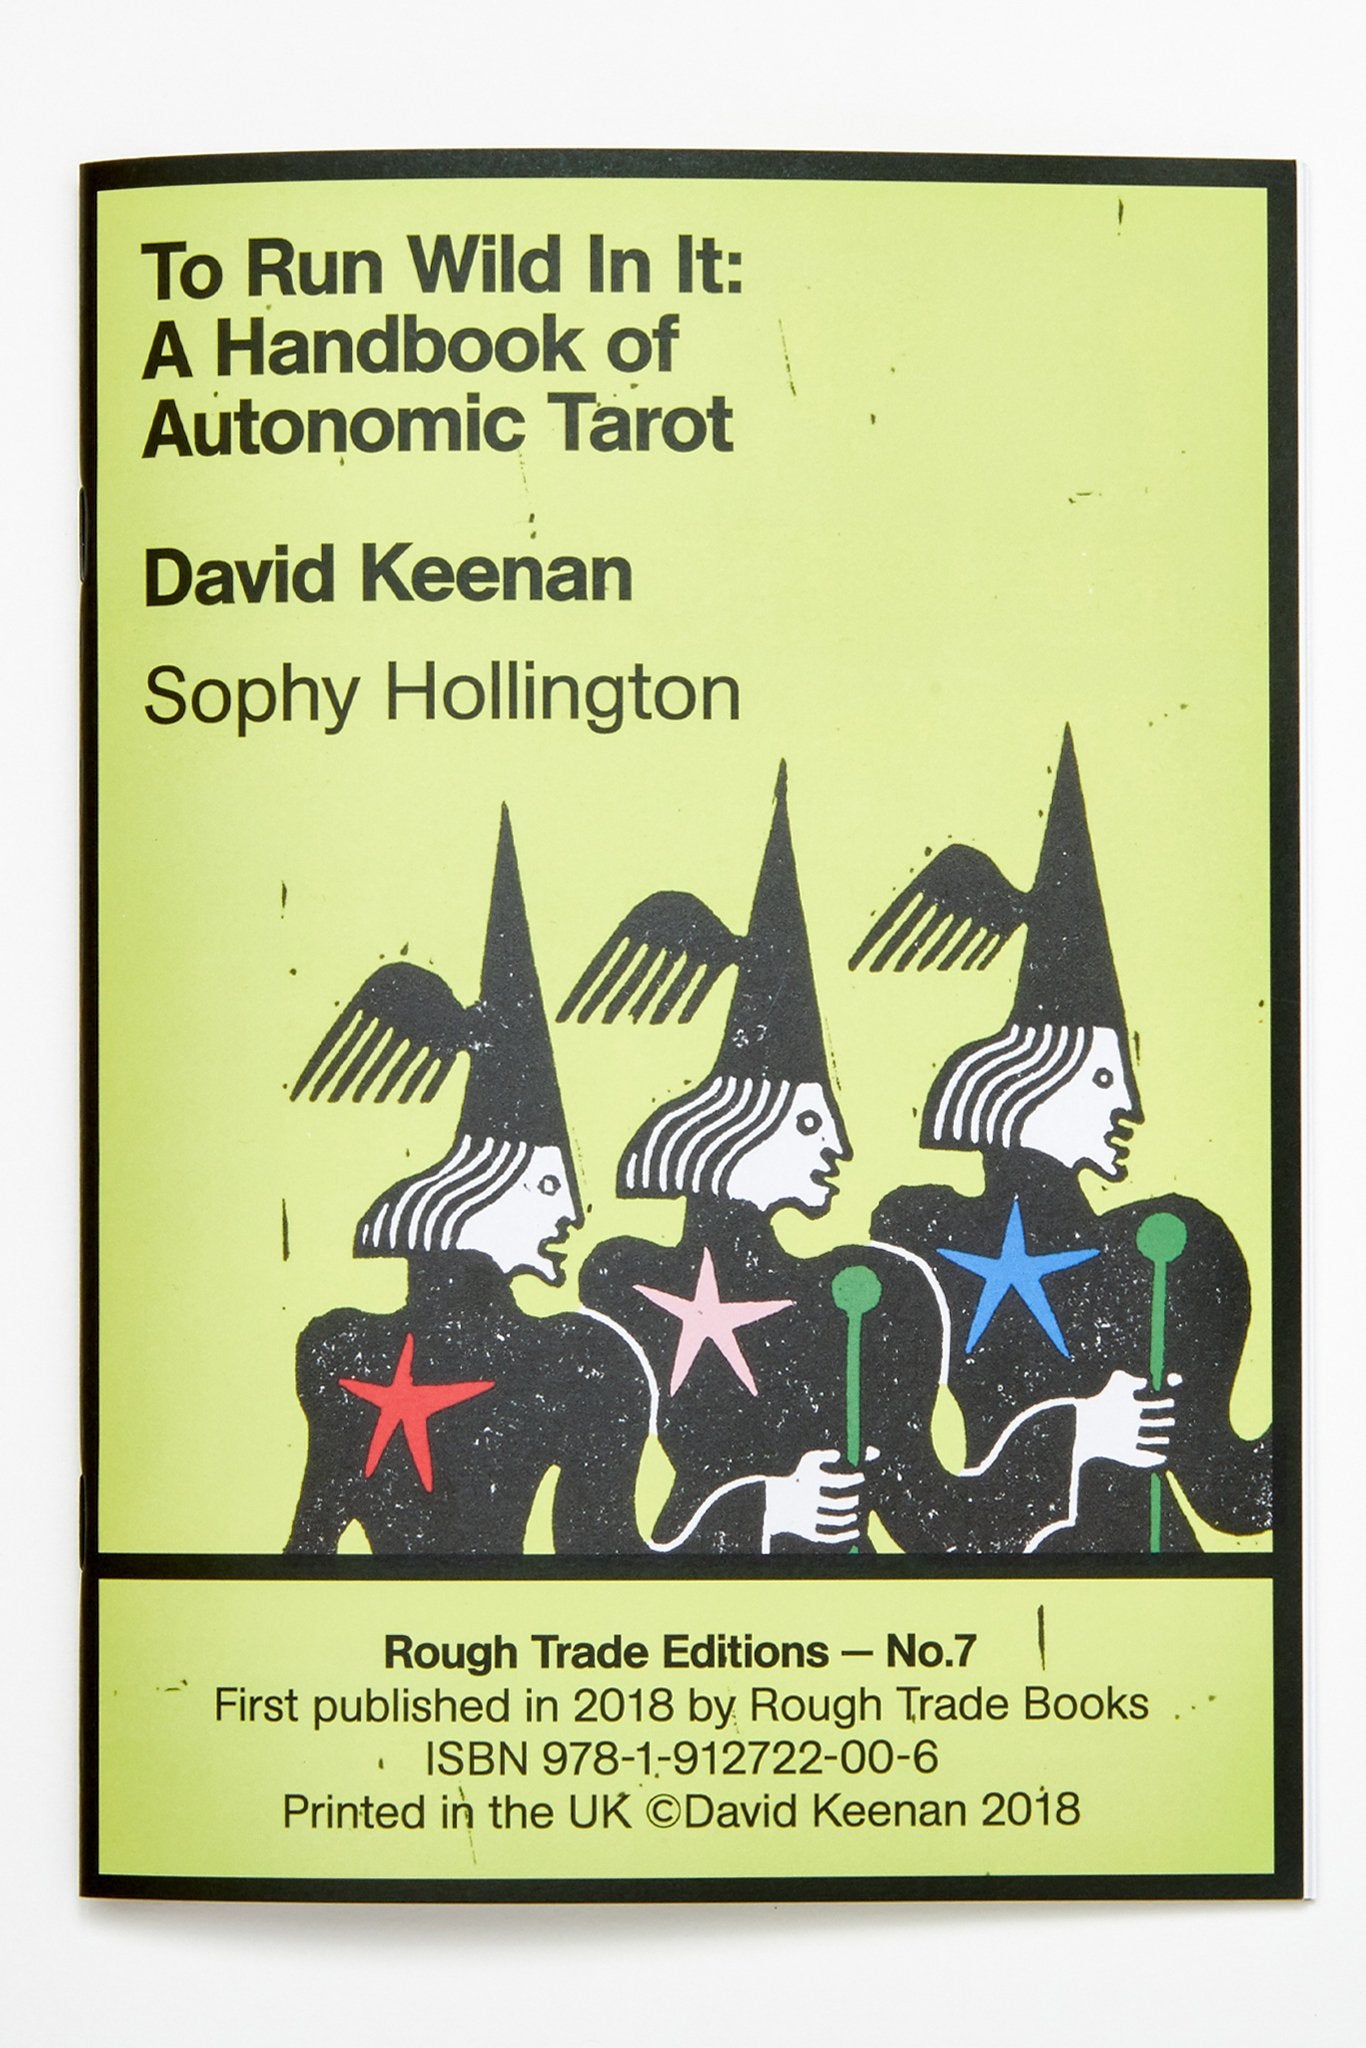 Autonomic Tarot Deck with "To Run Wild It In" Handbook